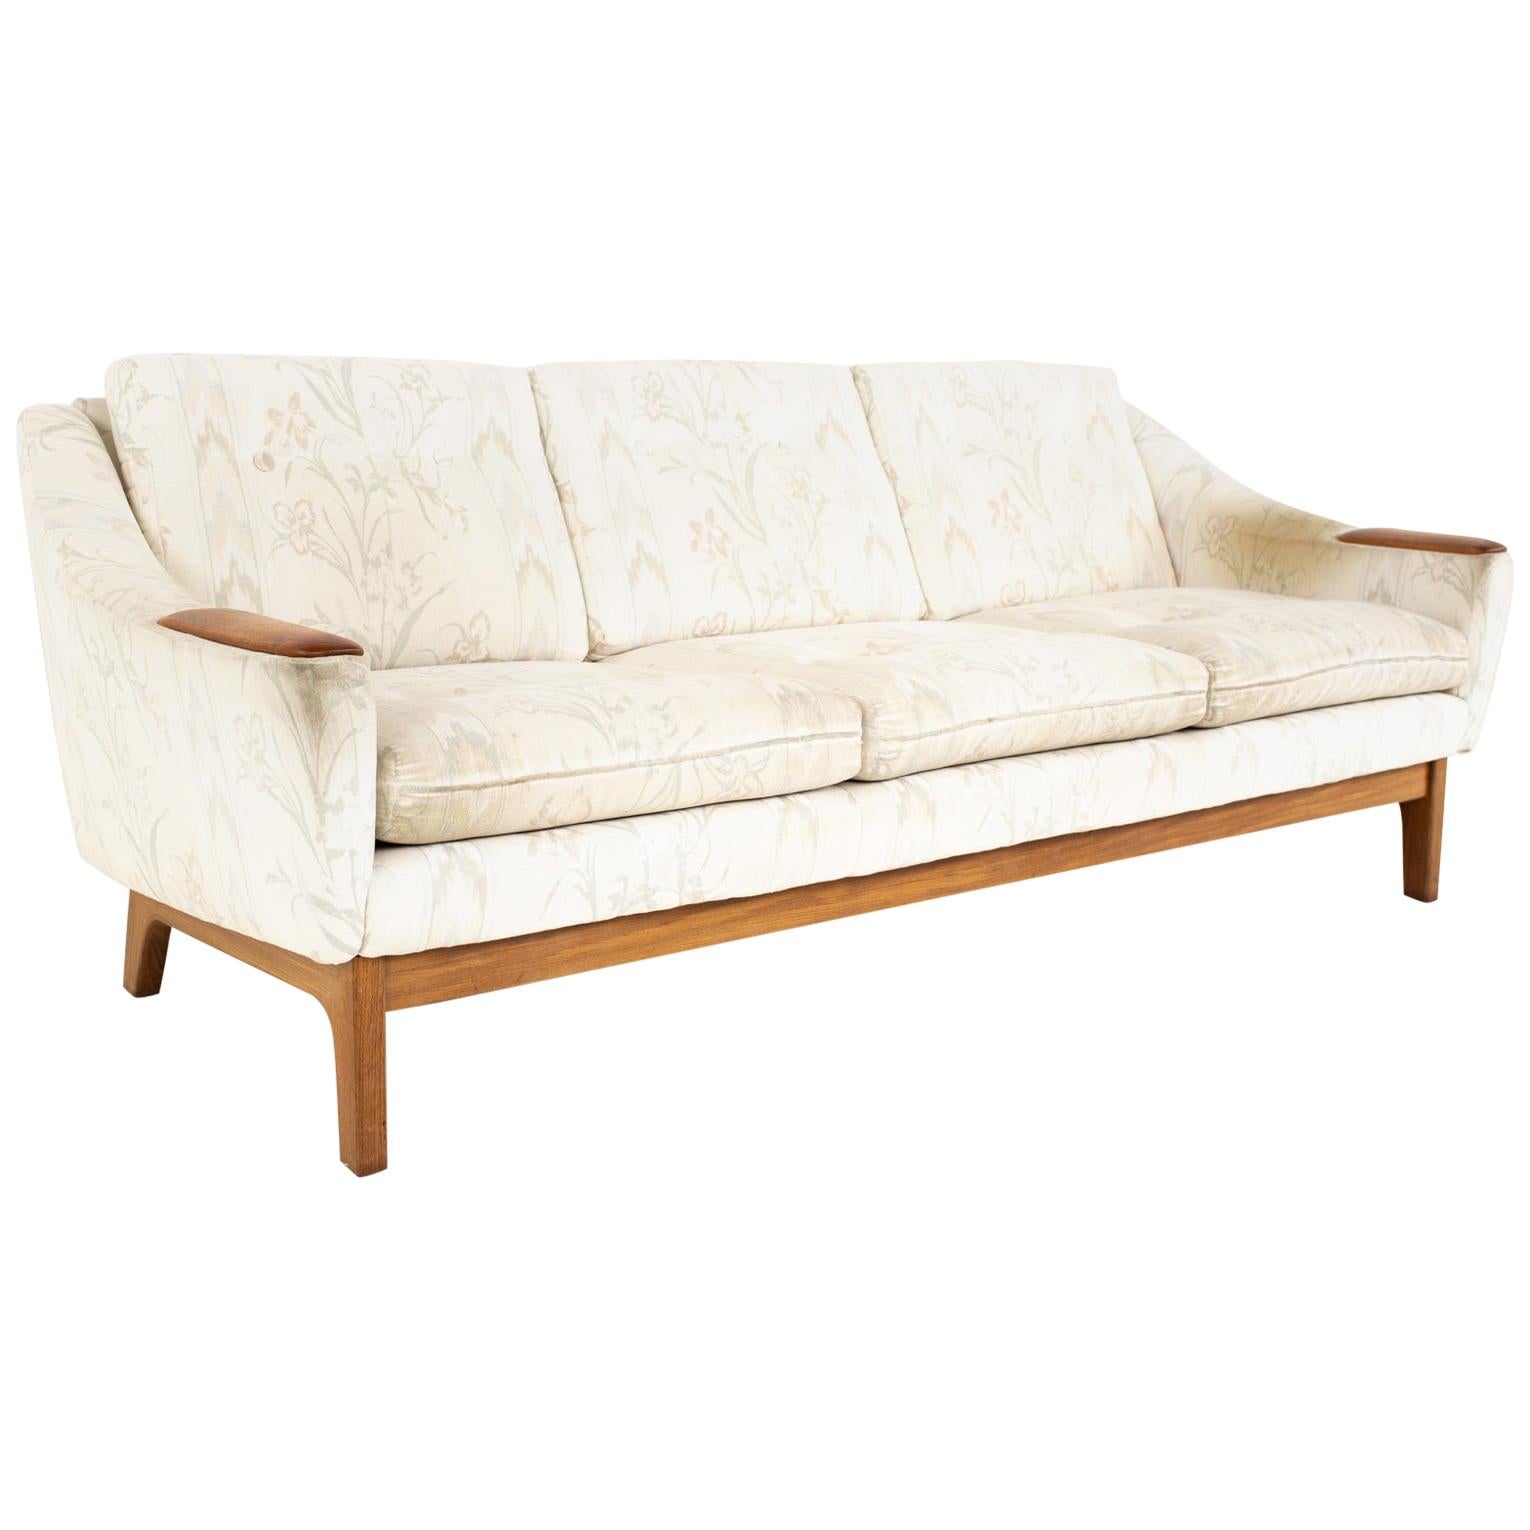 DUX Mid Century Teak Upholstered Sofa